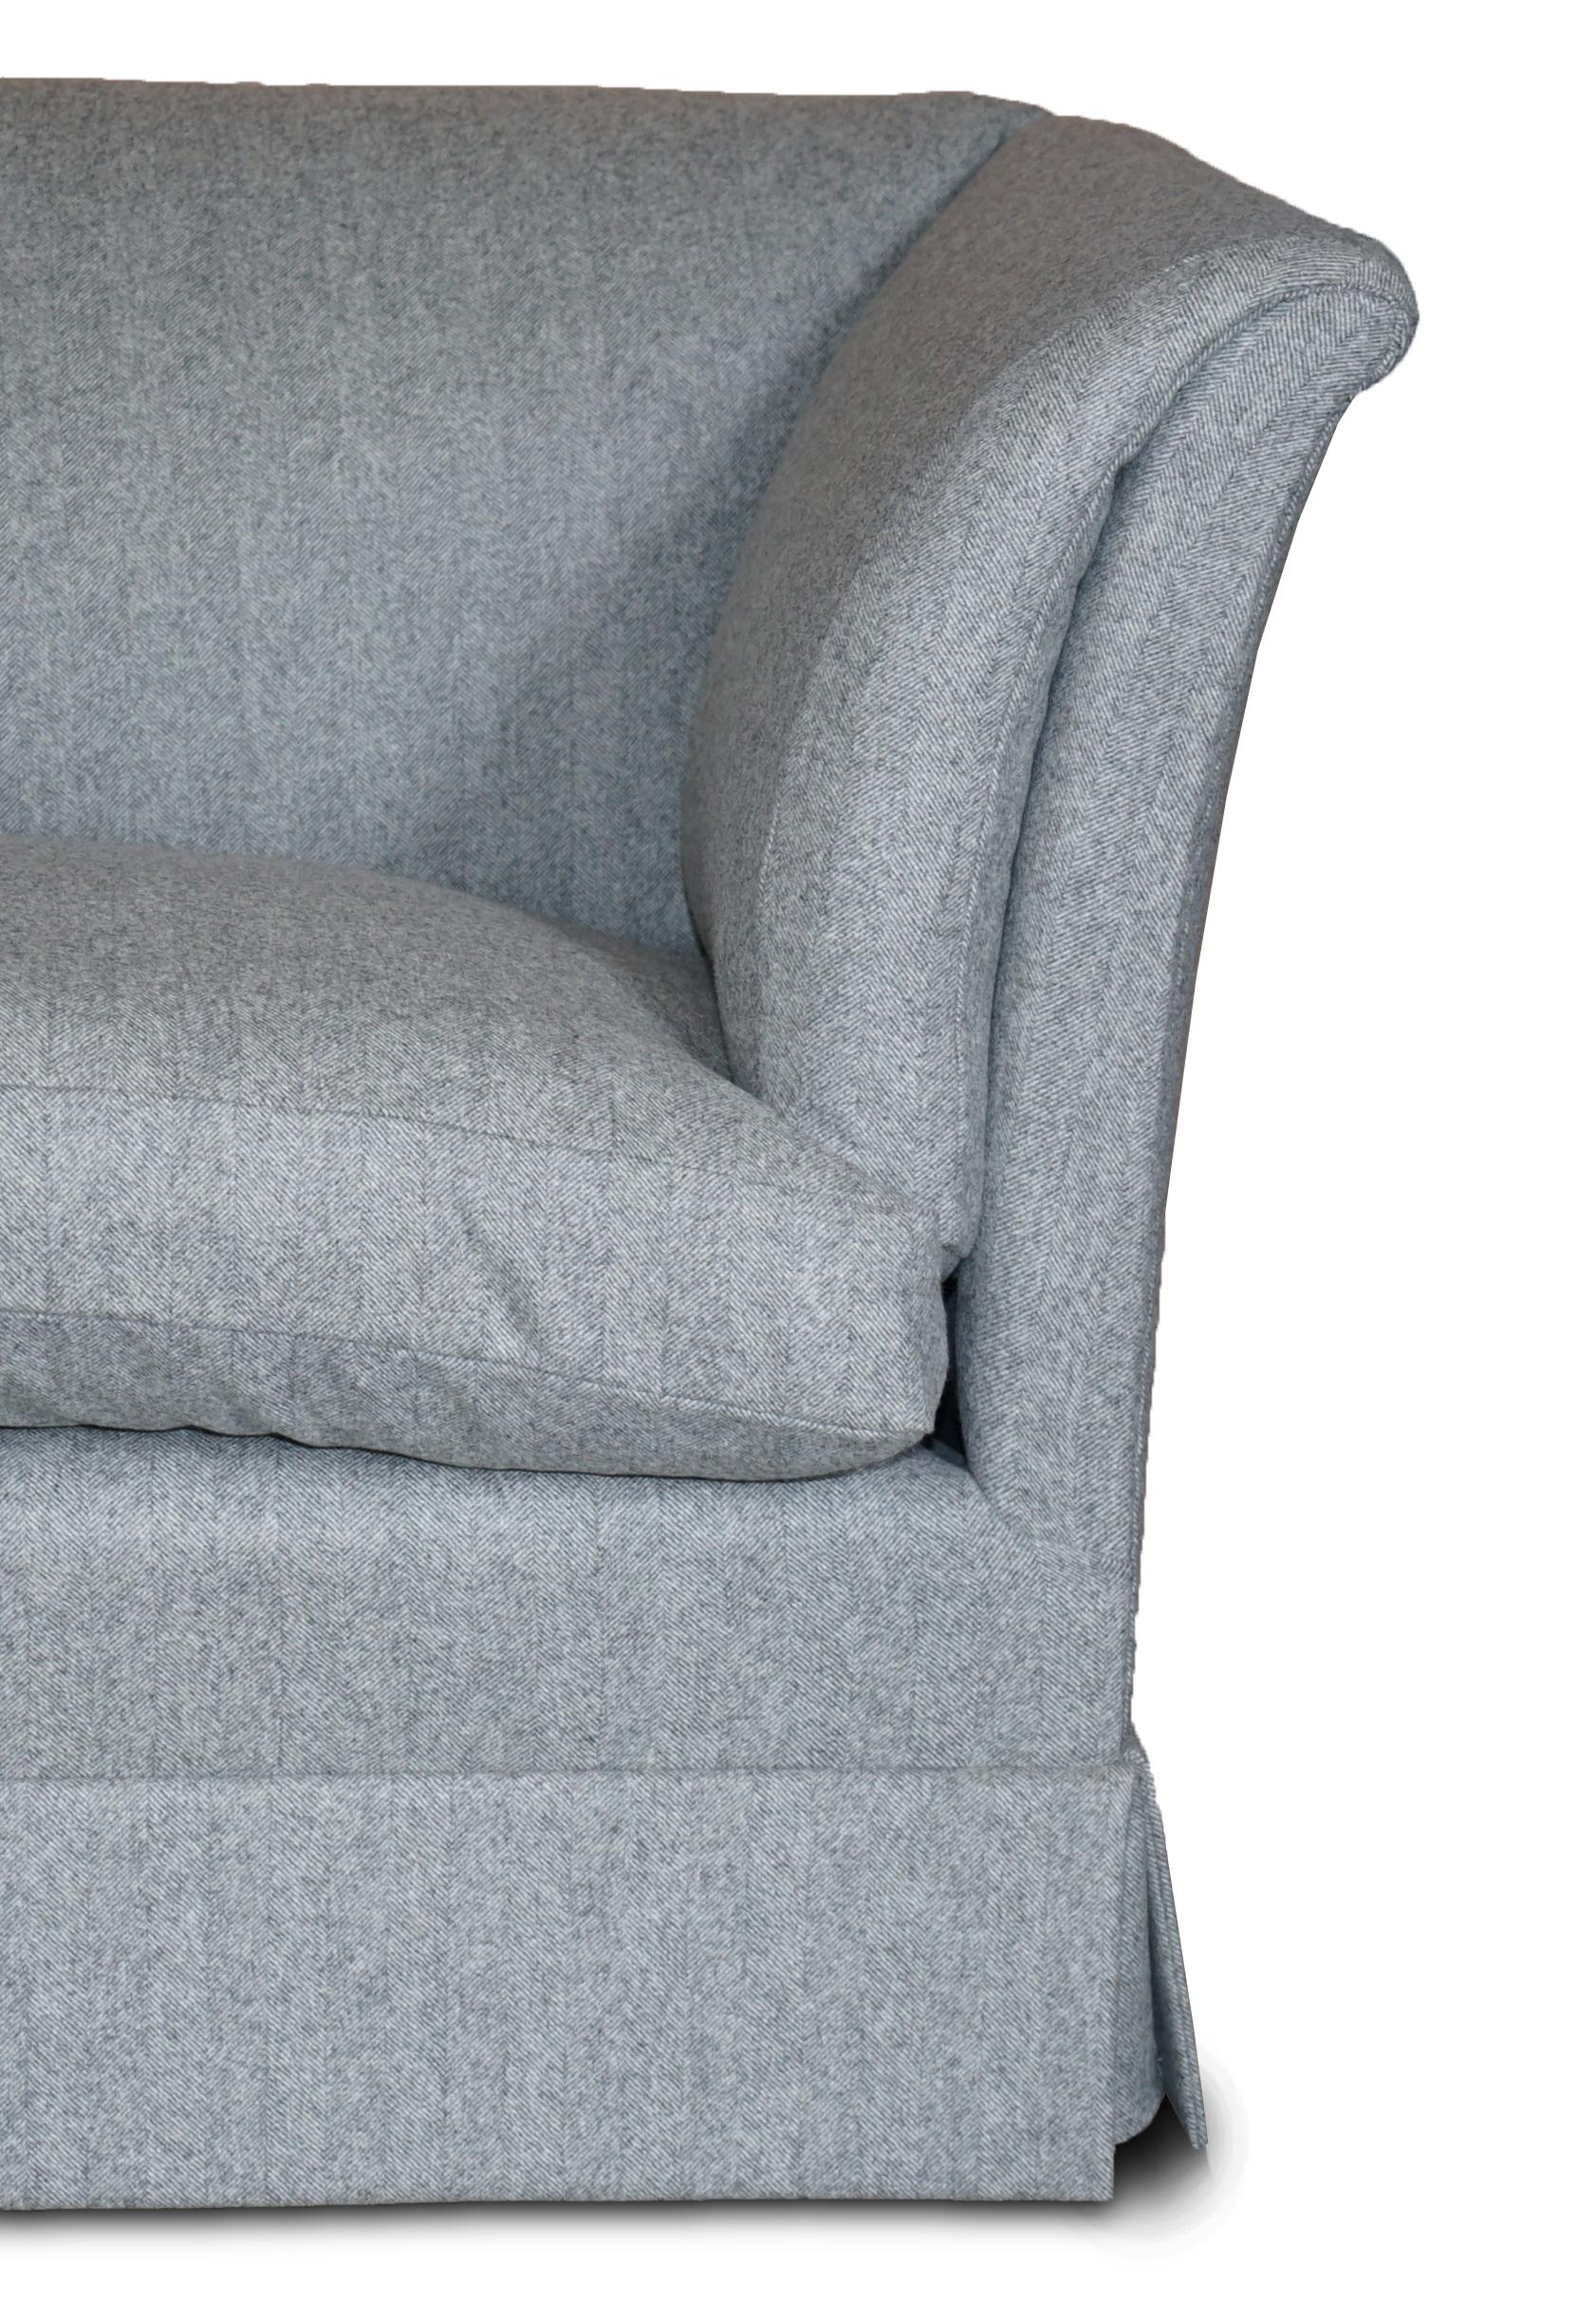 Fully Restored Howard & Son's Baring Sofa Grey Herringbone 100% Wool Upholstery For Sale 3